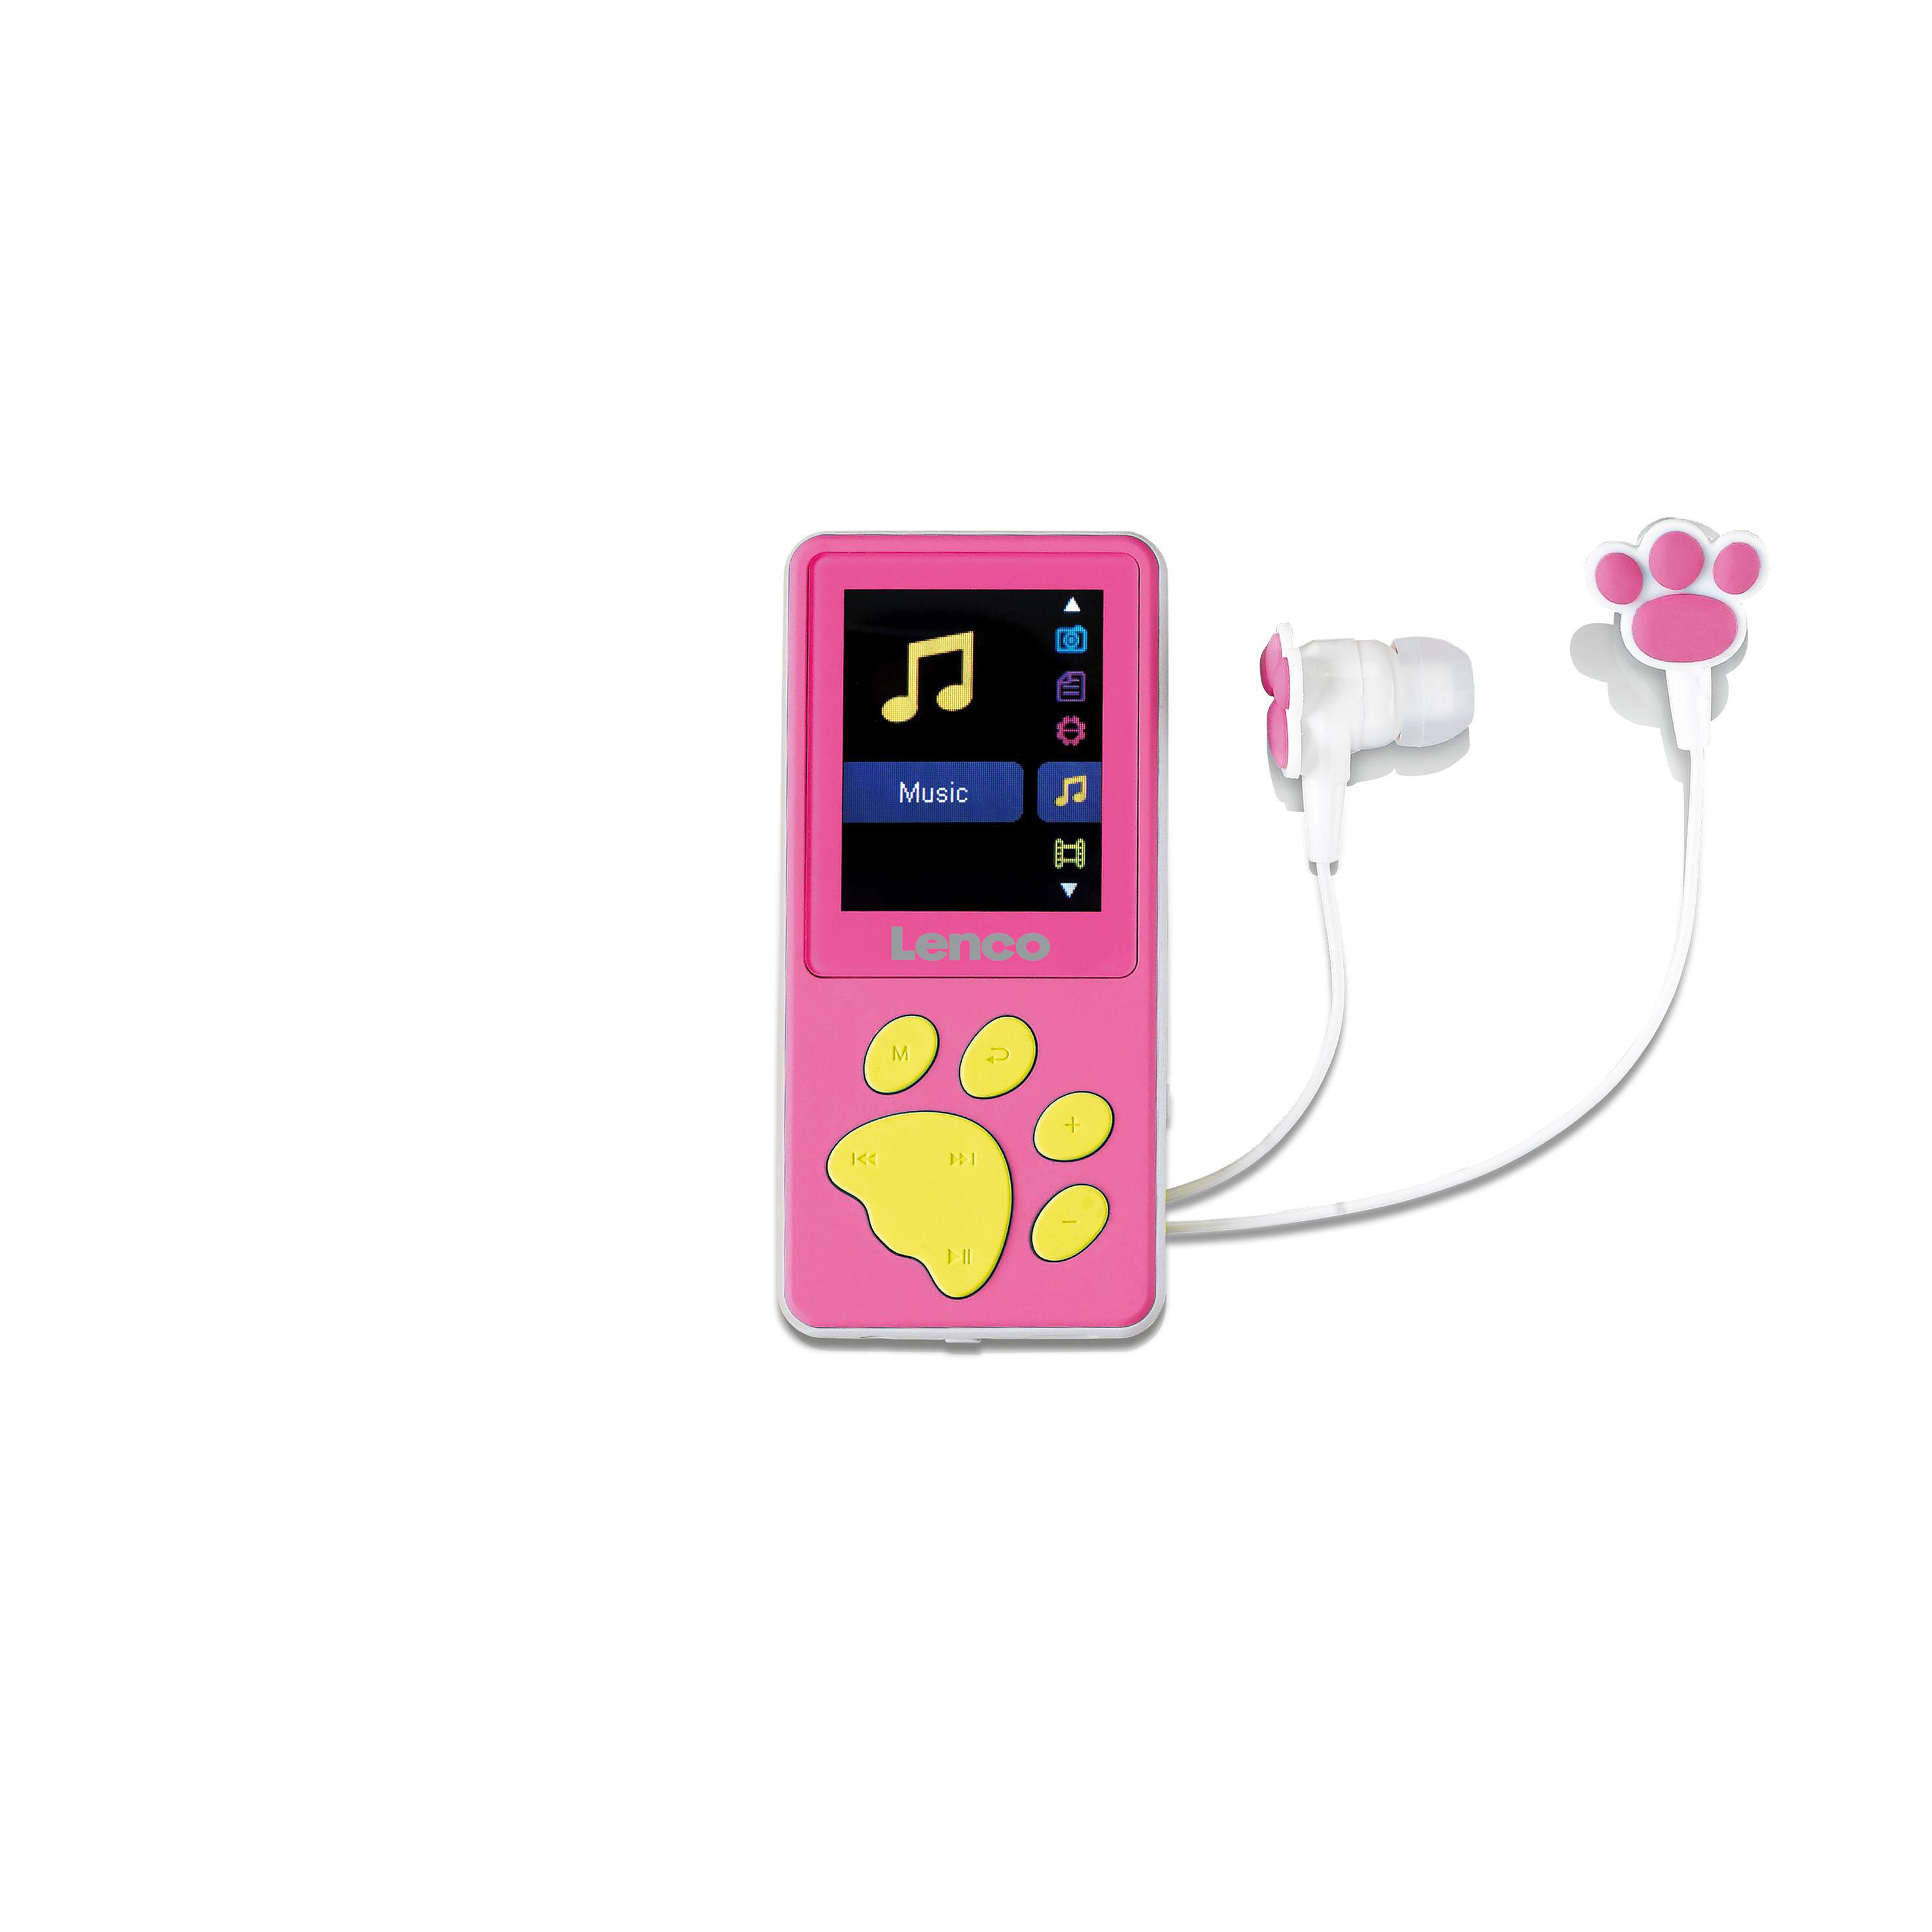 Player Xemio-560 MP3 LENCO GB, 8 Pink